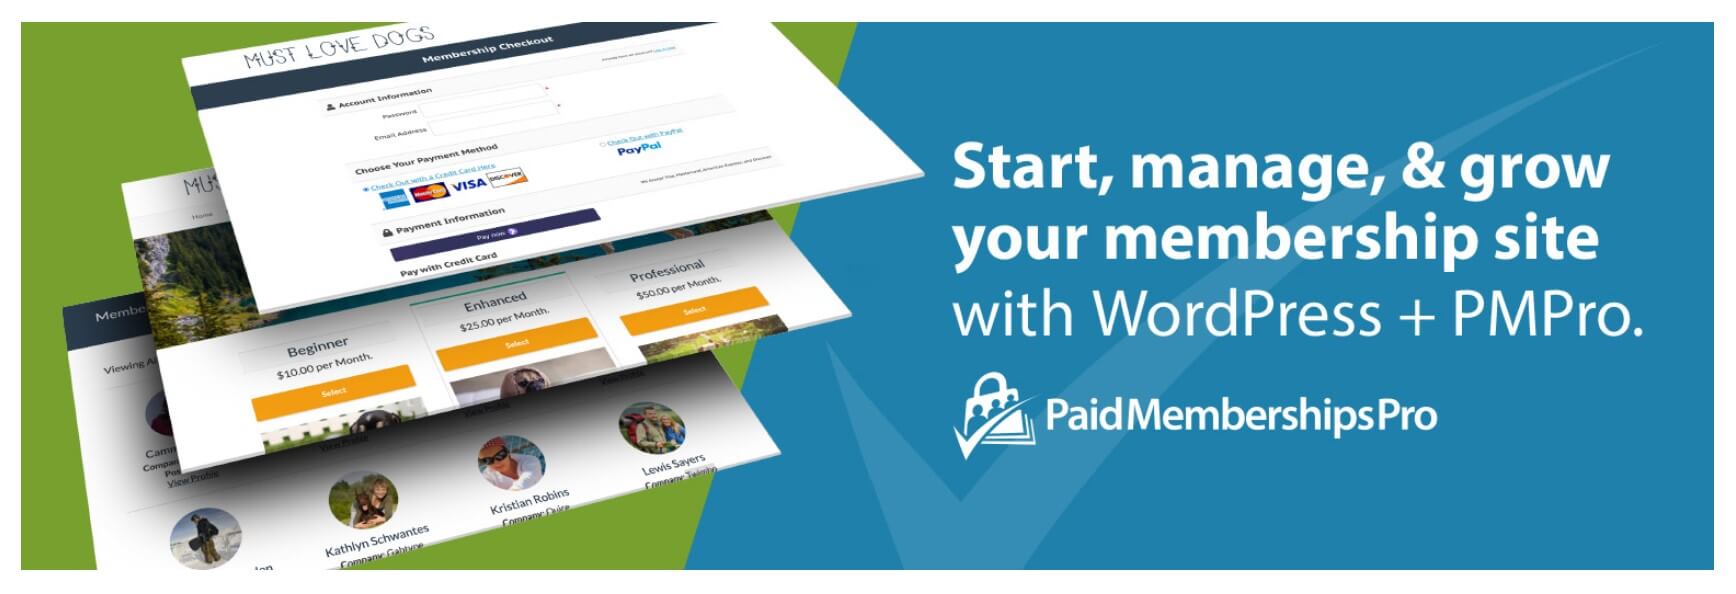 paid memberships pro wordpress membership plugin homepage